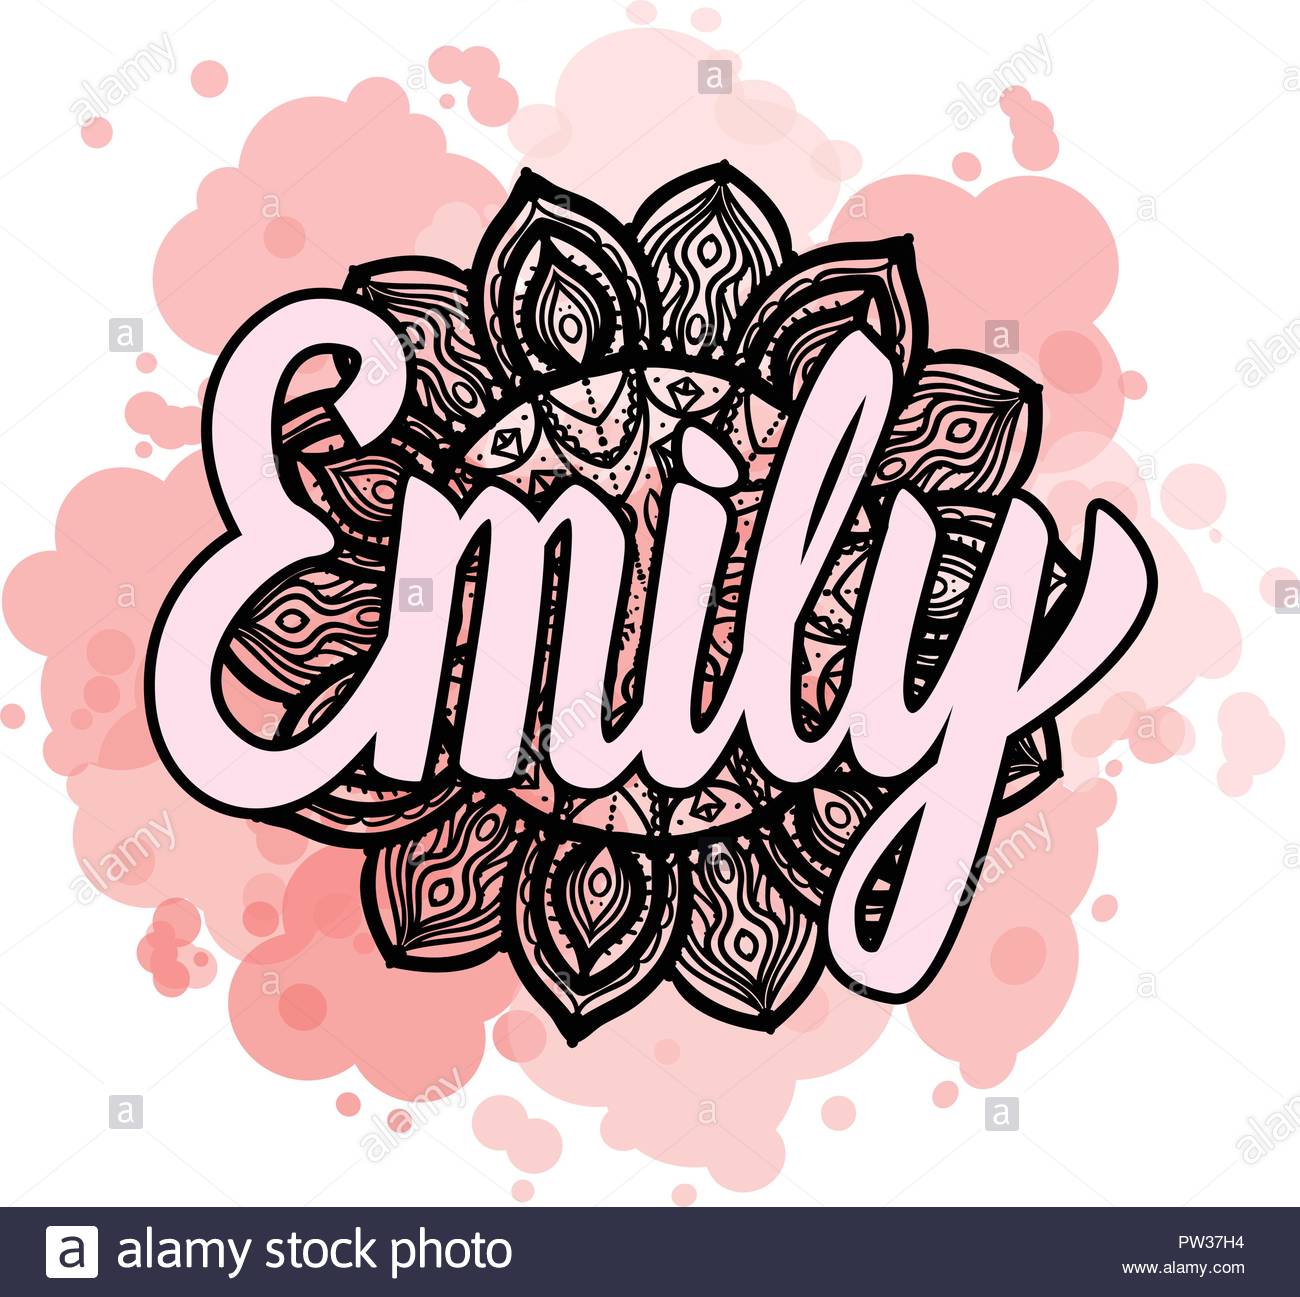 29+] Emily Background - WallpaperSafari